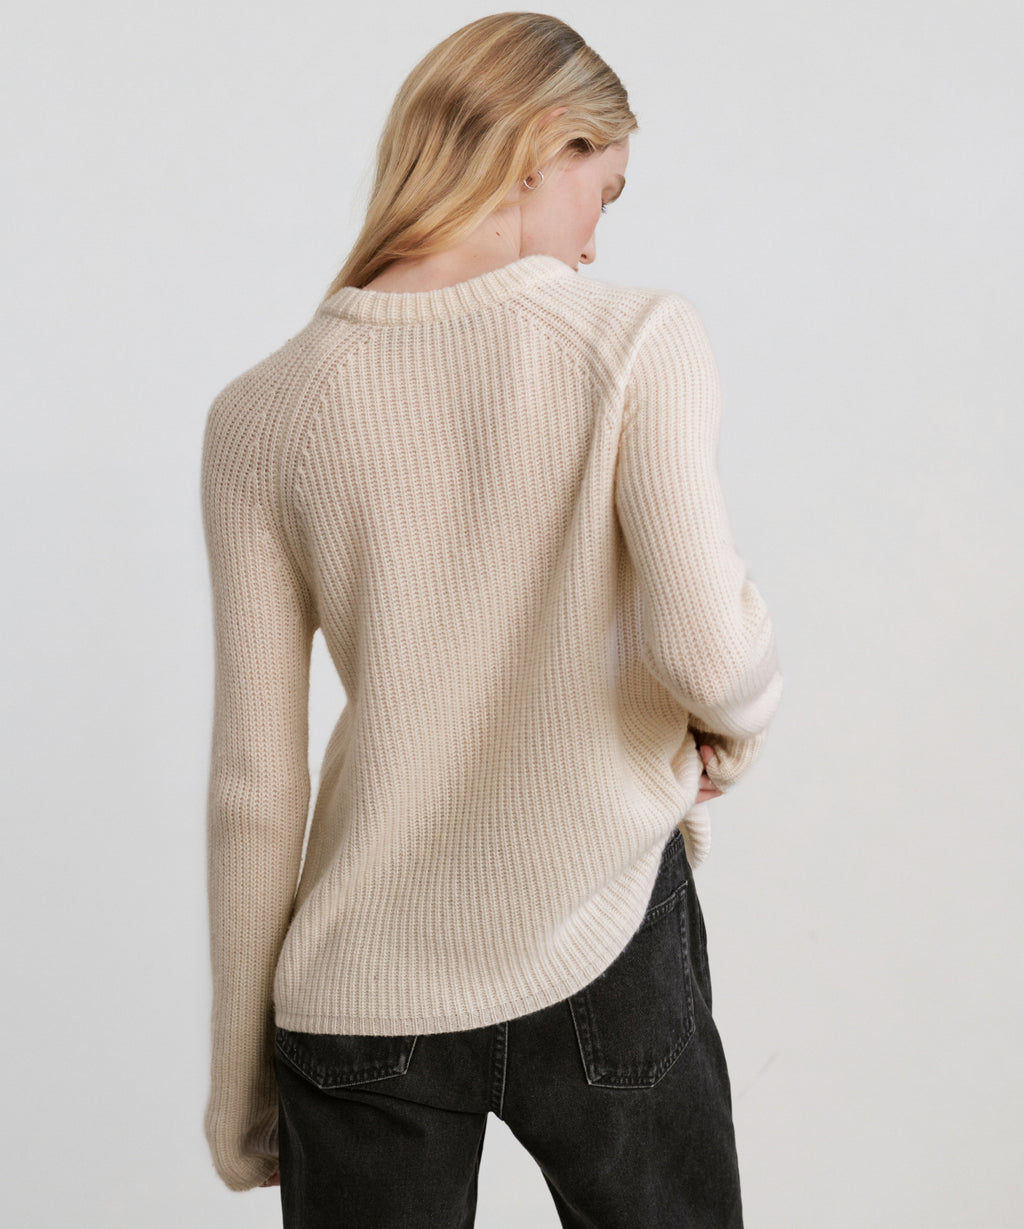 Jenni Kayne Women's Cashmere Fisherman Sweater in Stone Size 3X